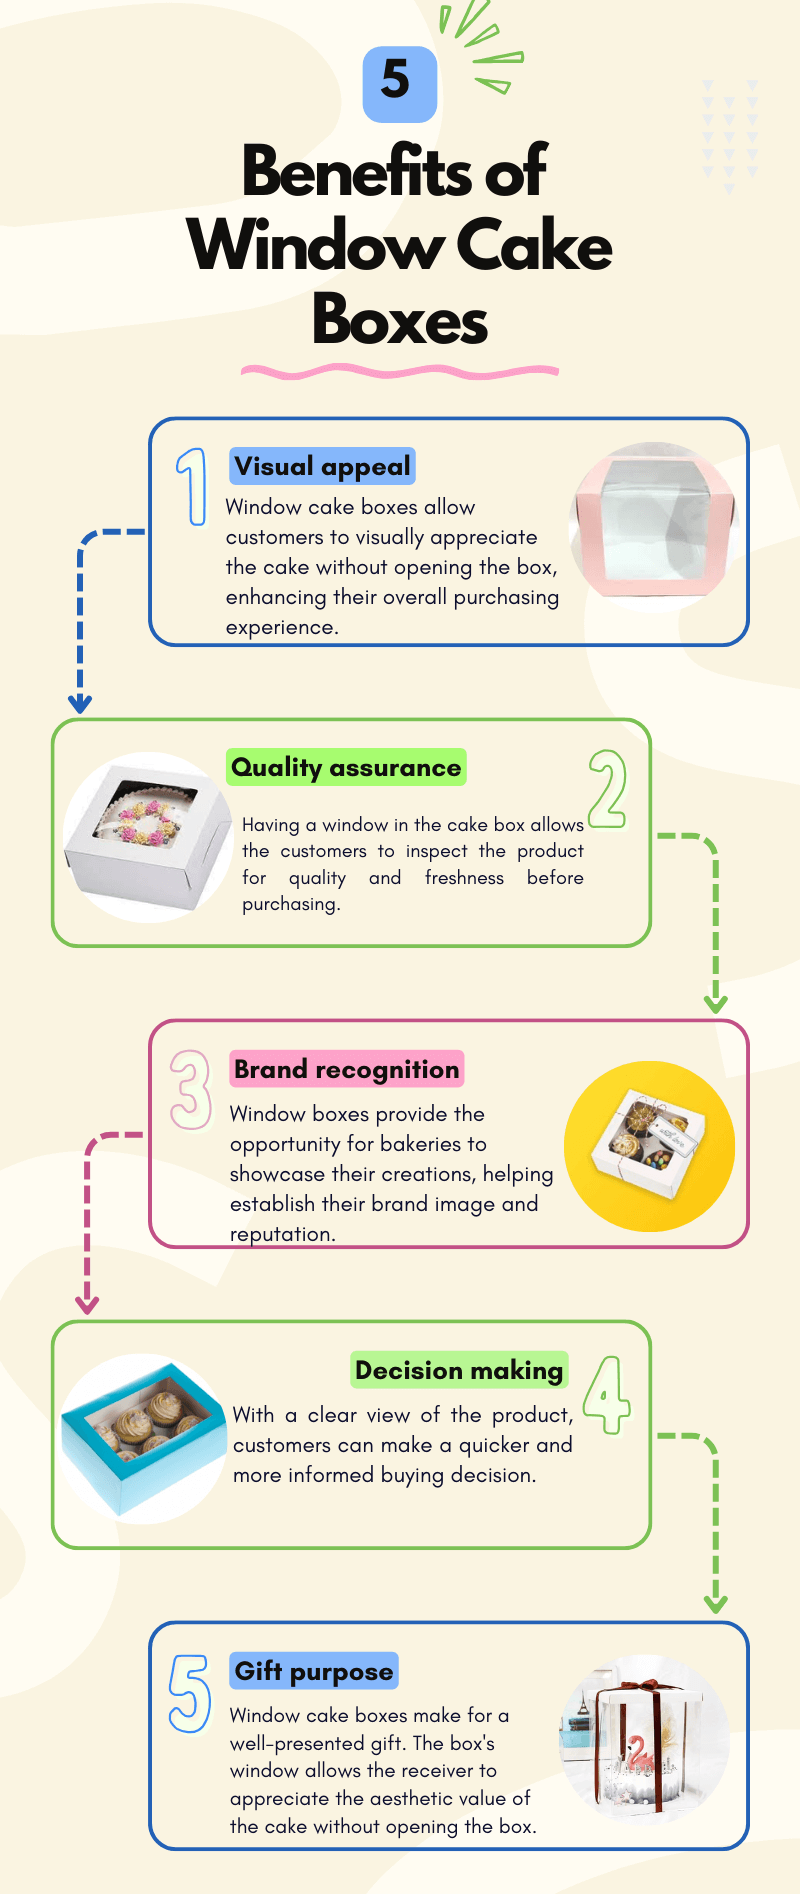 Benefits of Window cake boxes